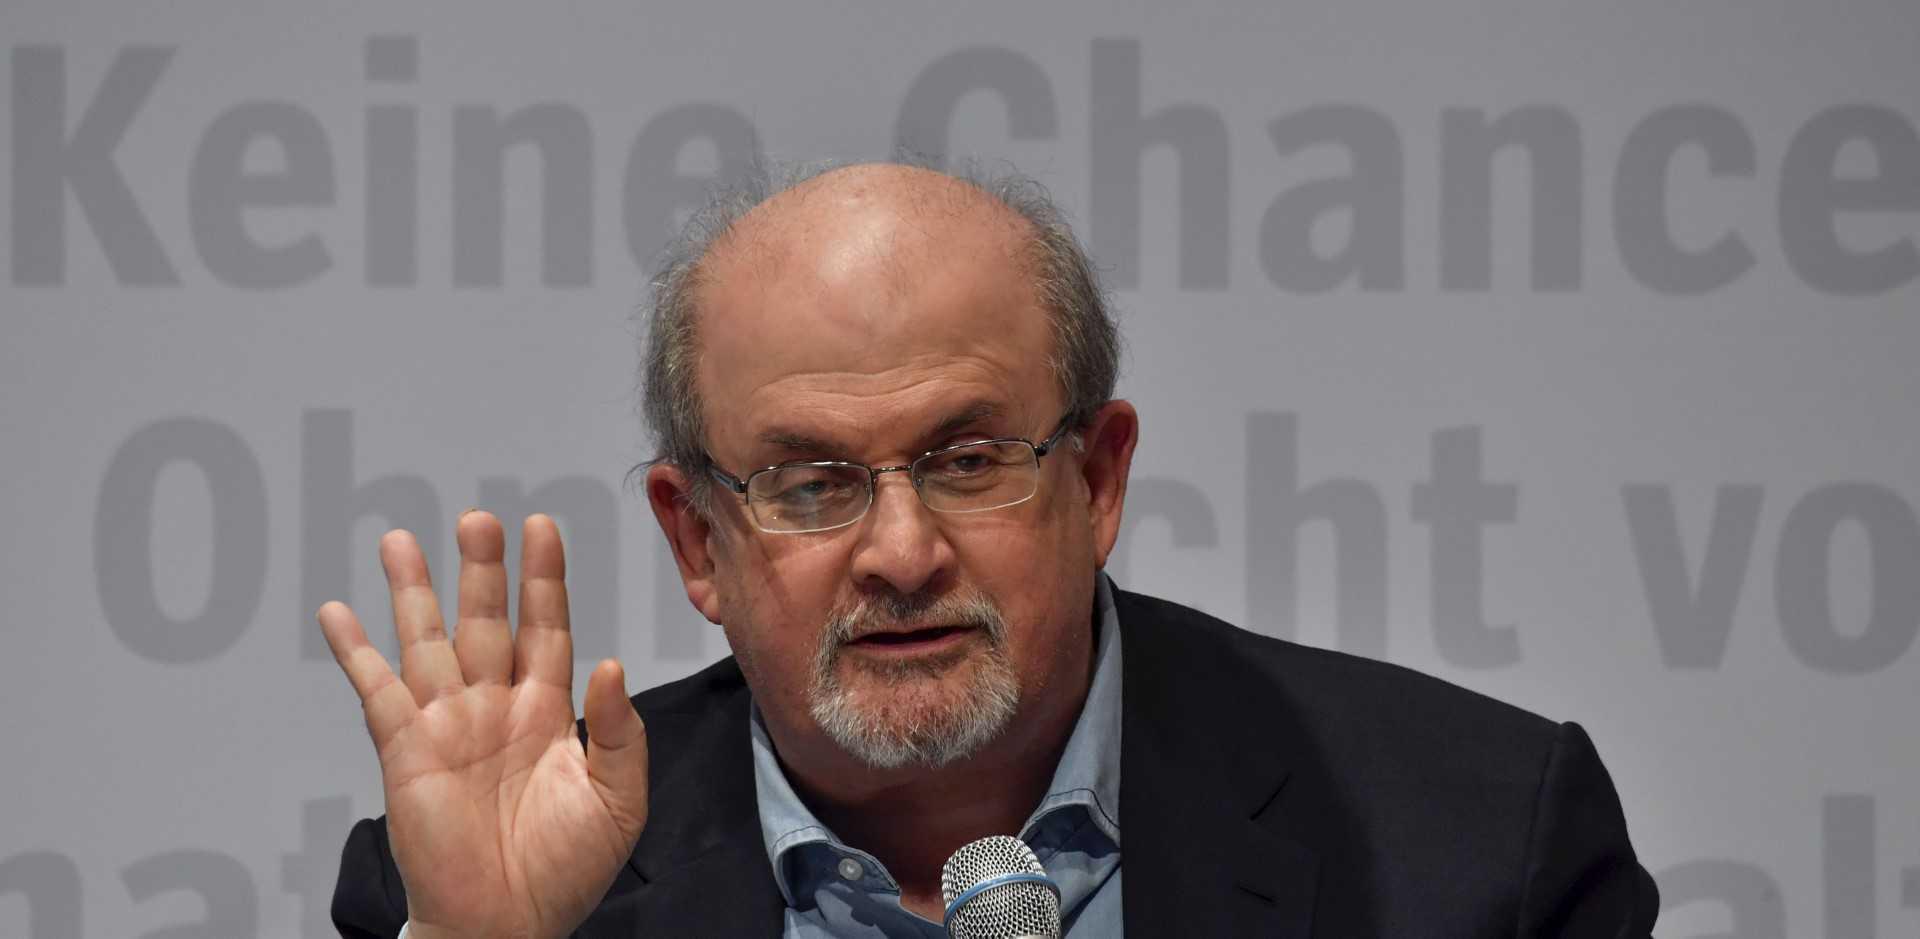 Author Salman Rushdie speaks at the Frankfurt Book Fair 2017 in Frankfurt am Main, central Germany, on Oct 12, 2017. Photo: AFP